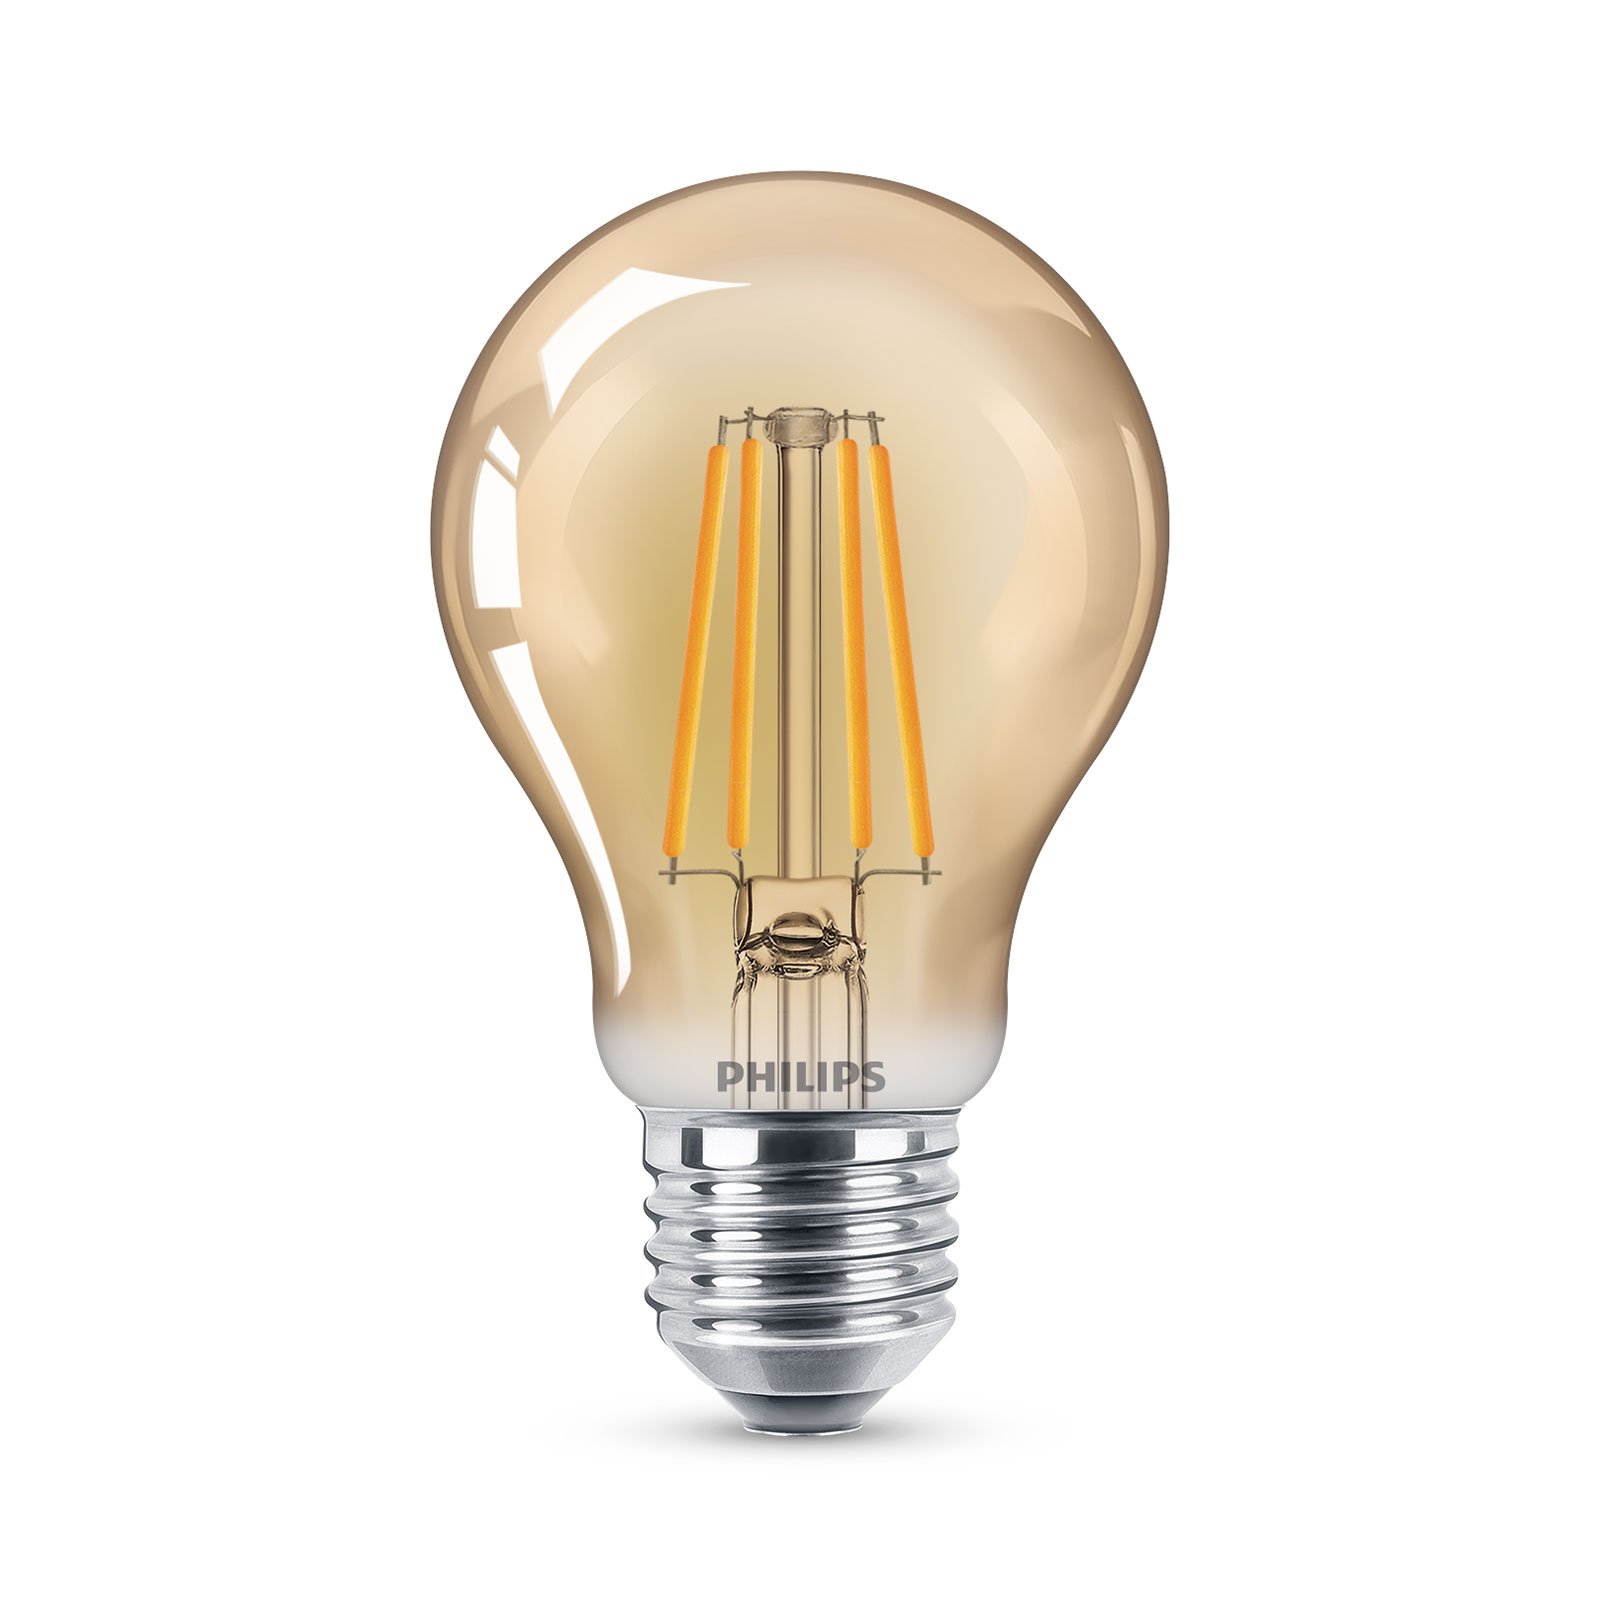 Philips LED lamp E27 4W 2.500K | Lampen24.be